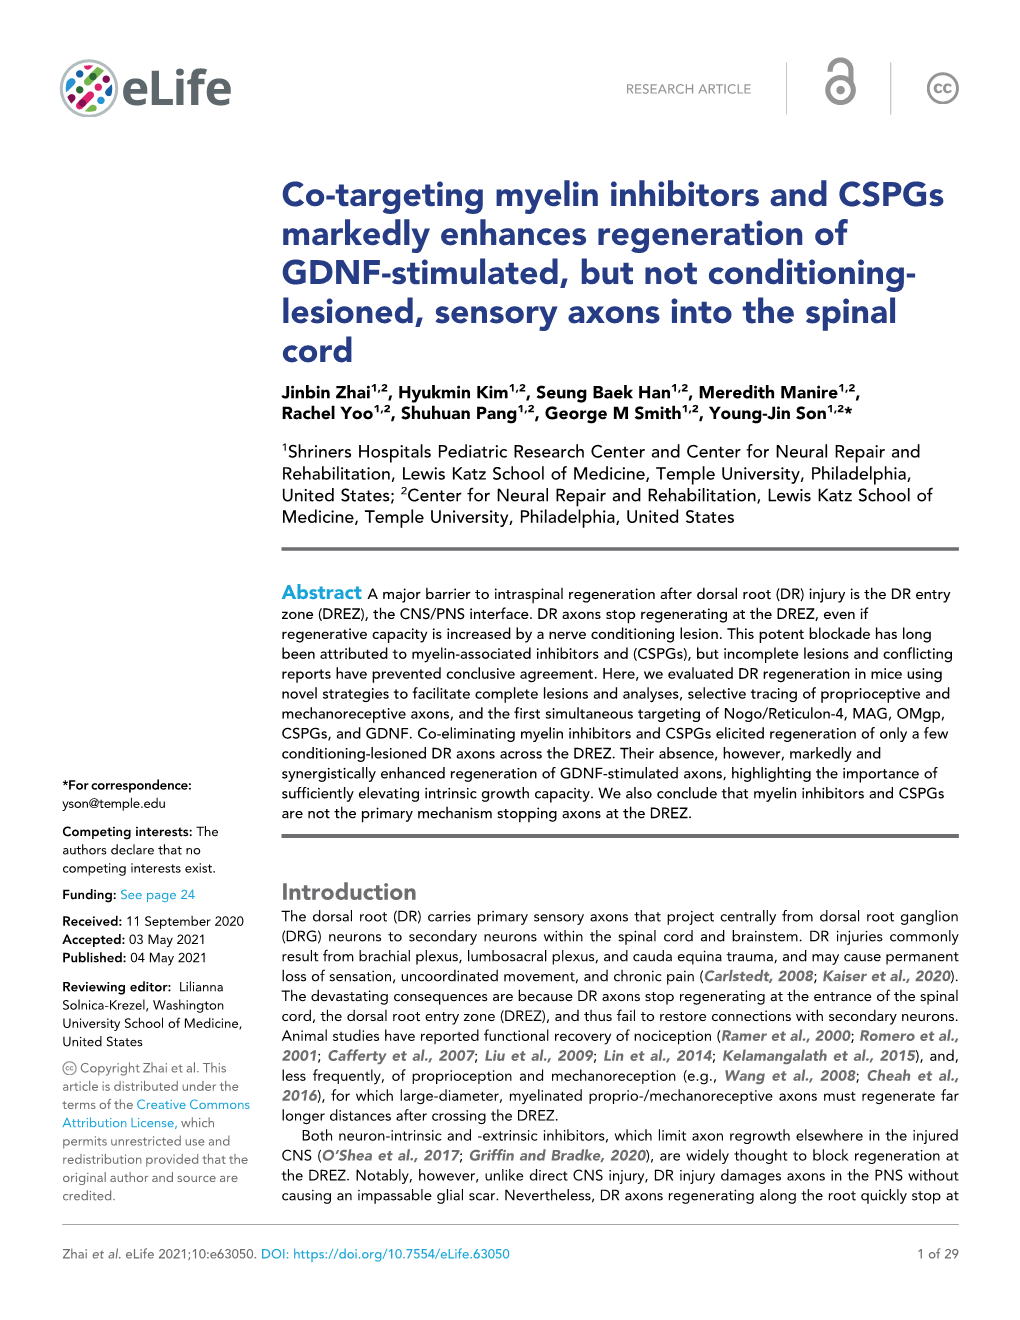 Co-Targeting Myelin Inhibitors and Cspgs Markedly Enhances